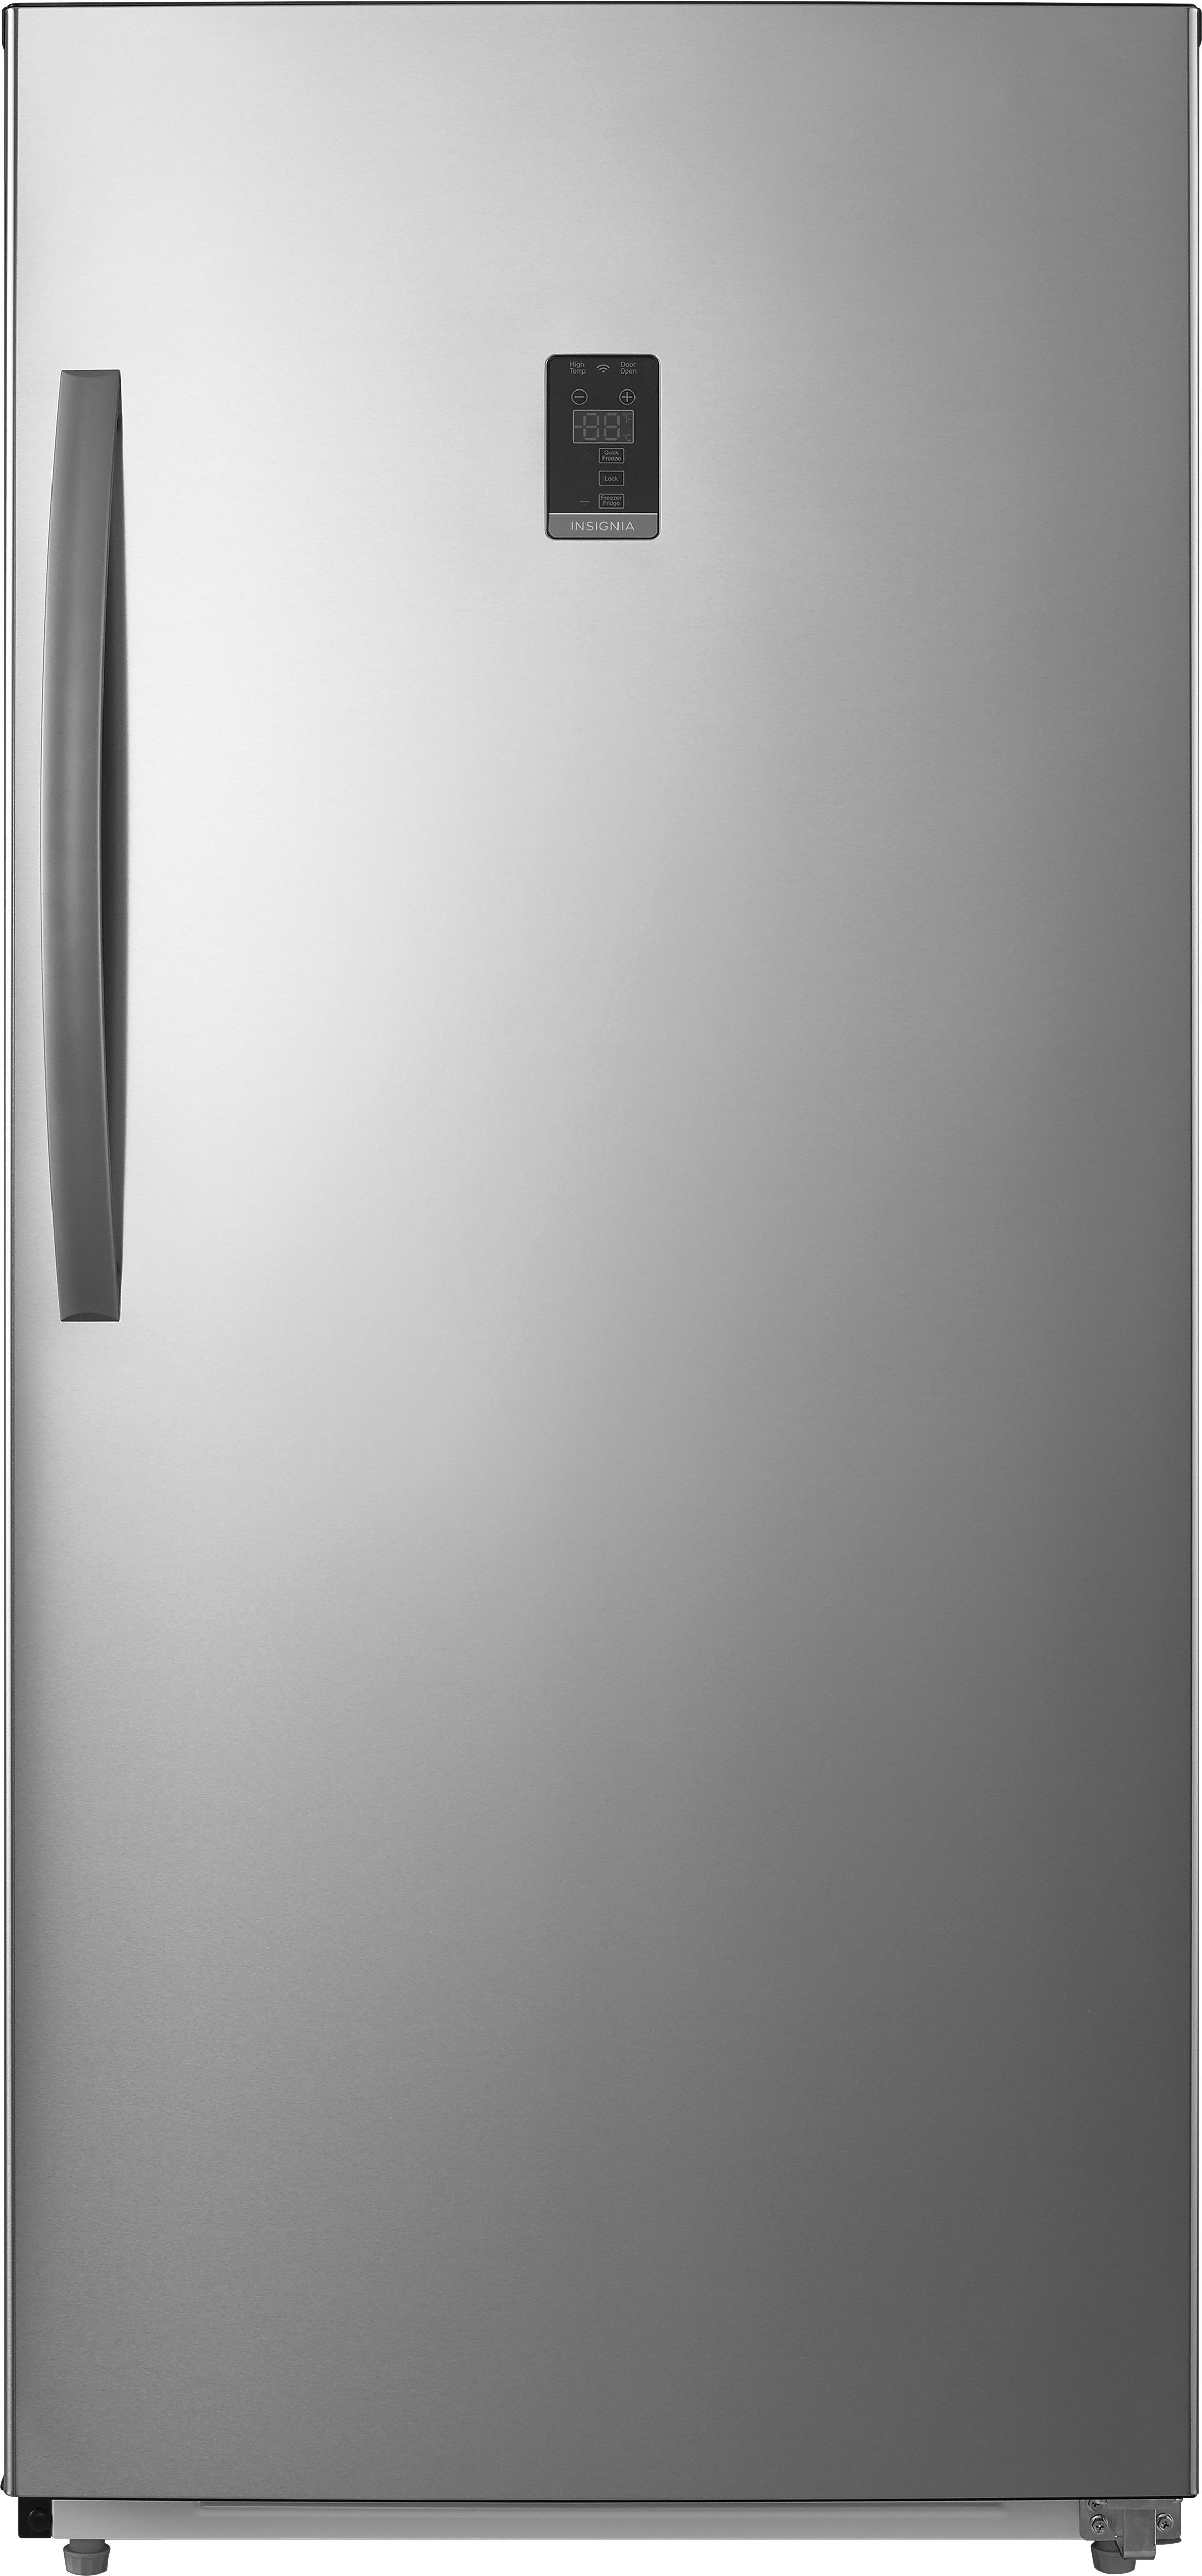 Freezer Upright 13.8 Cu ft, Conversion Standing Freezer and